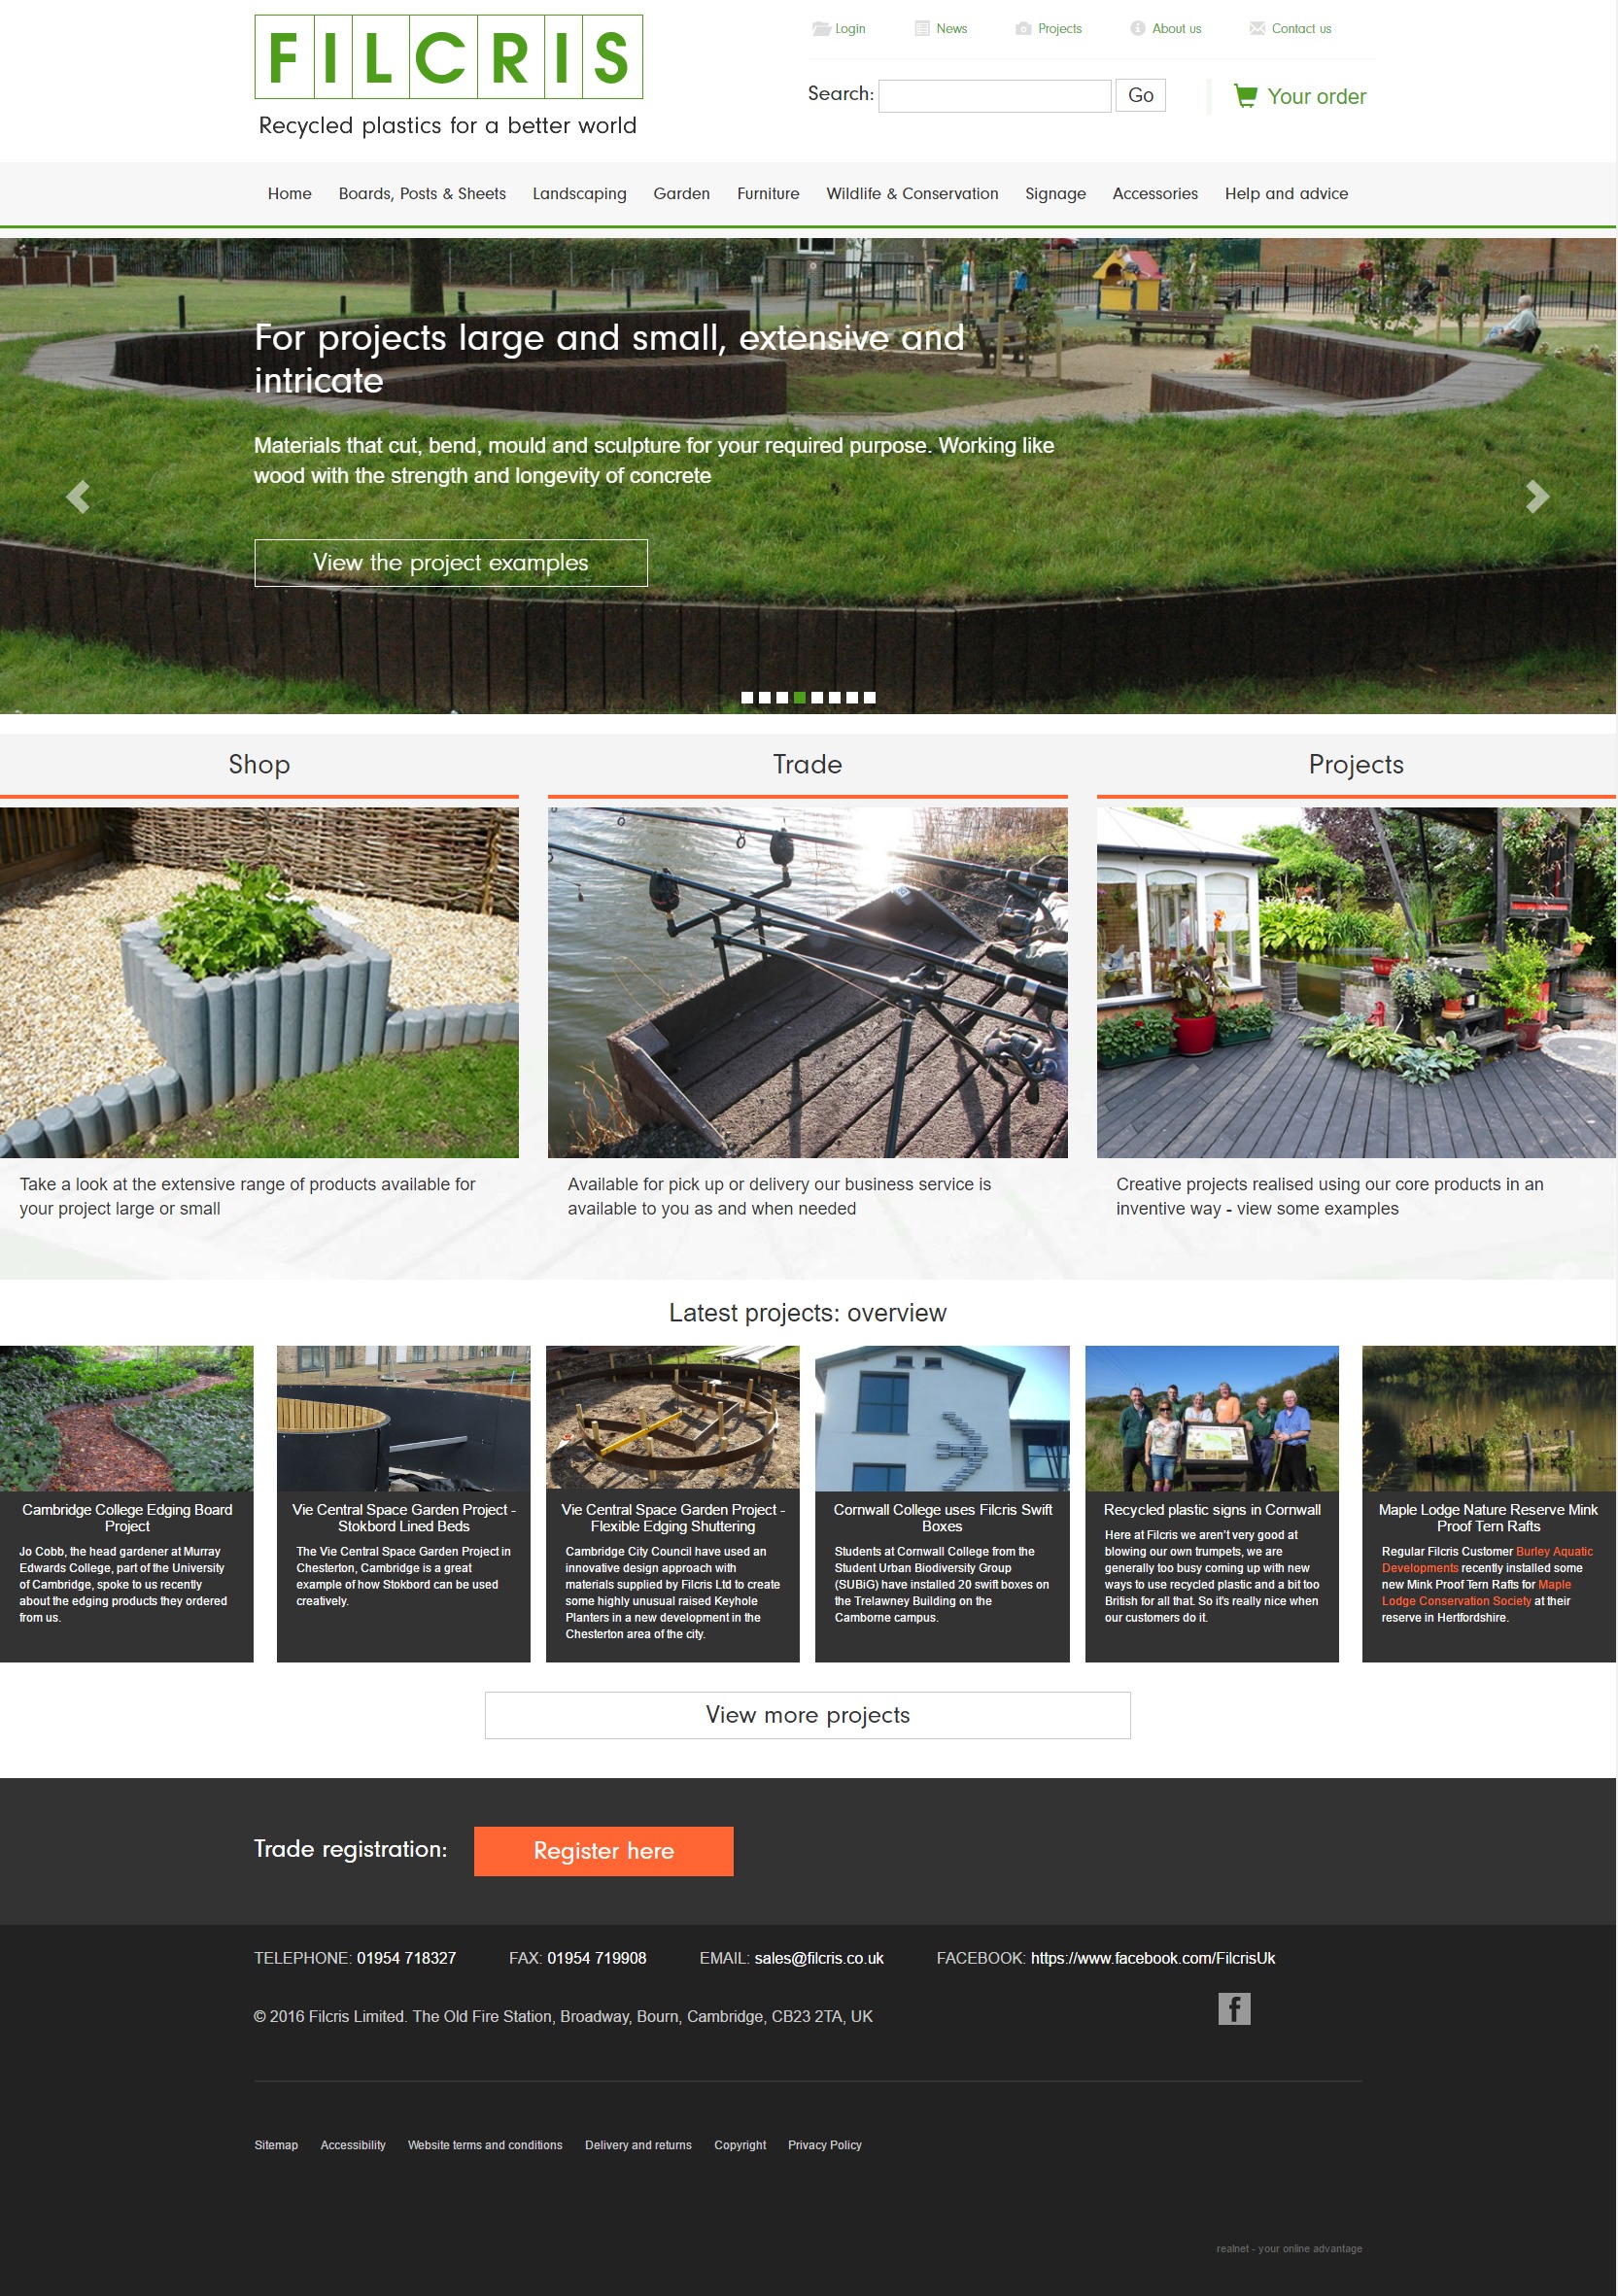 Filcris website home page design